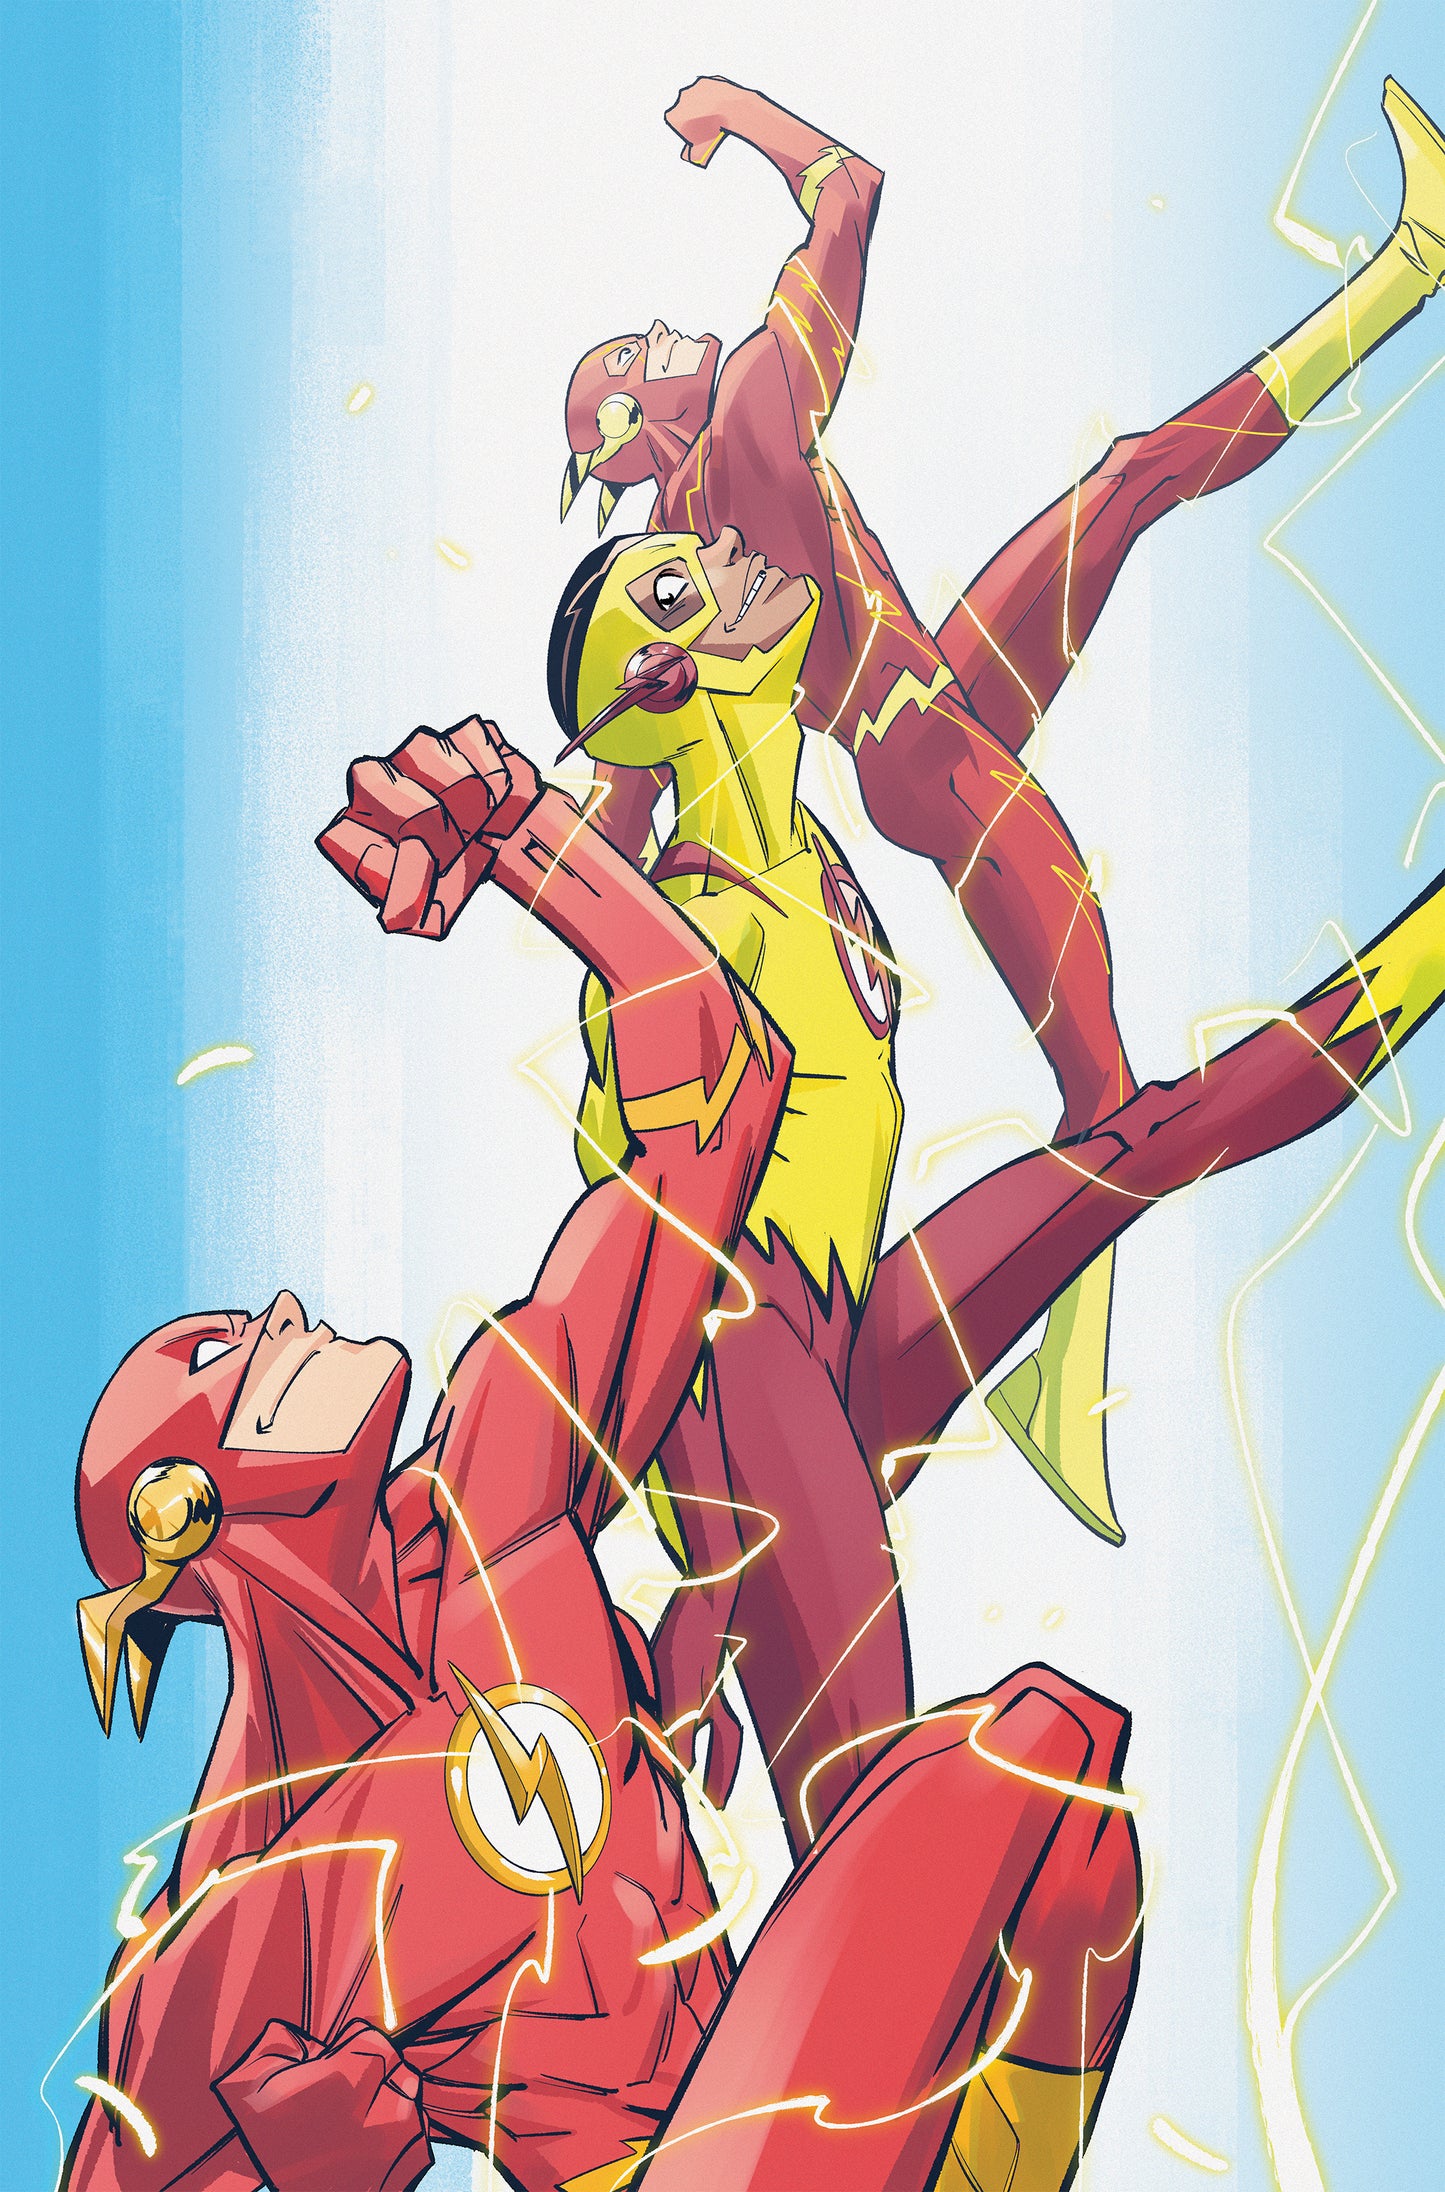 The Flash #797